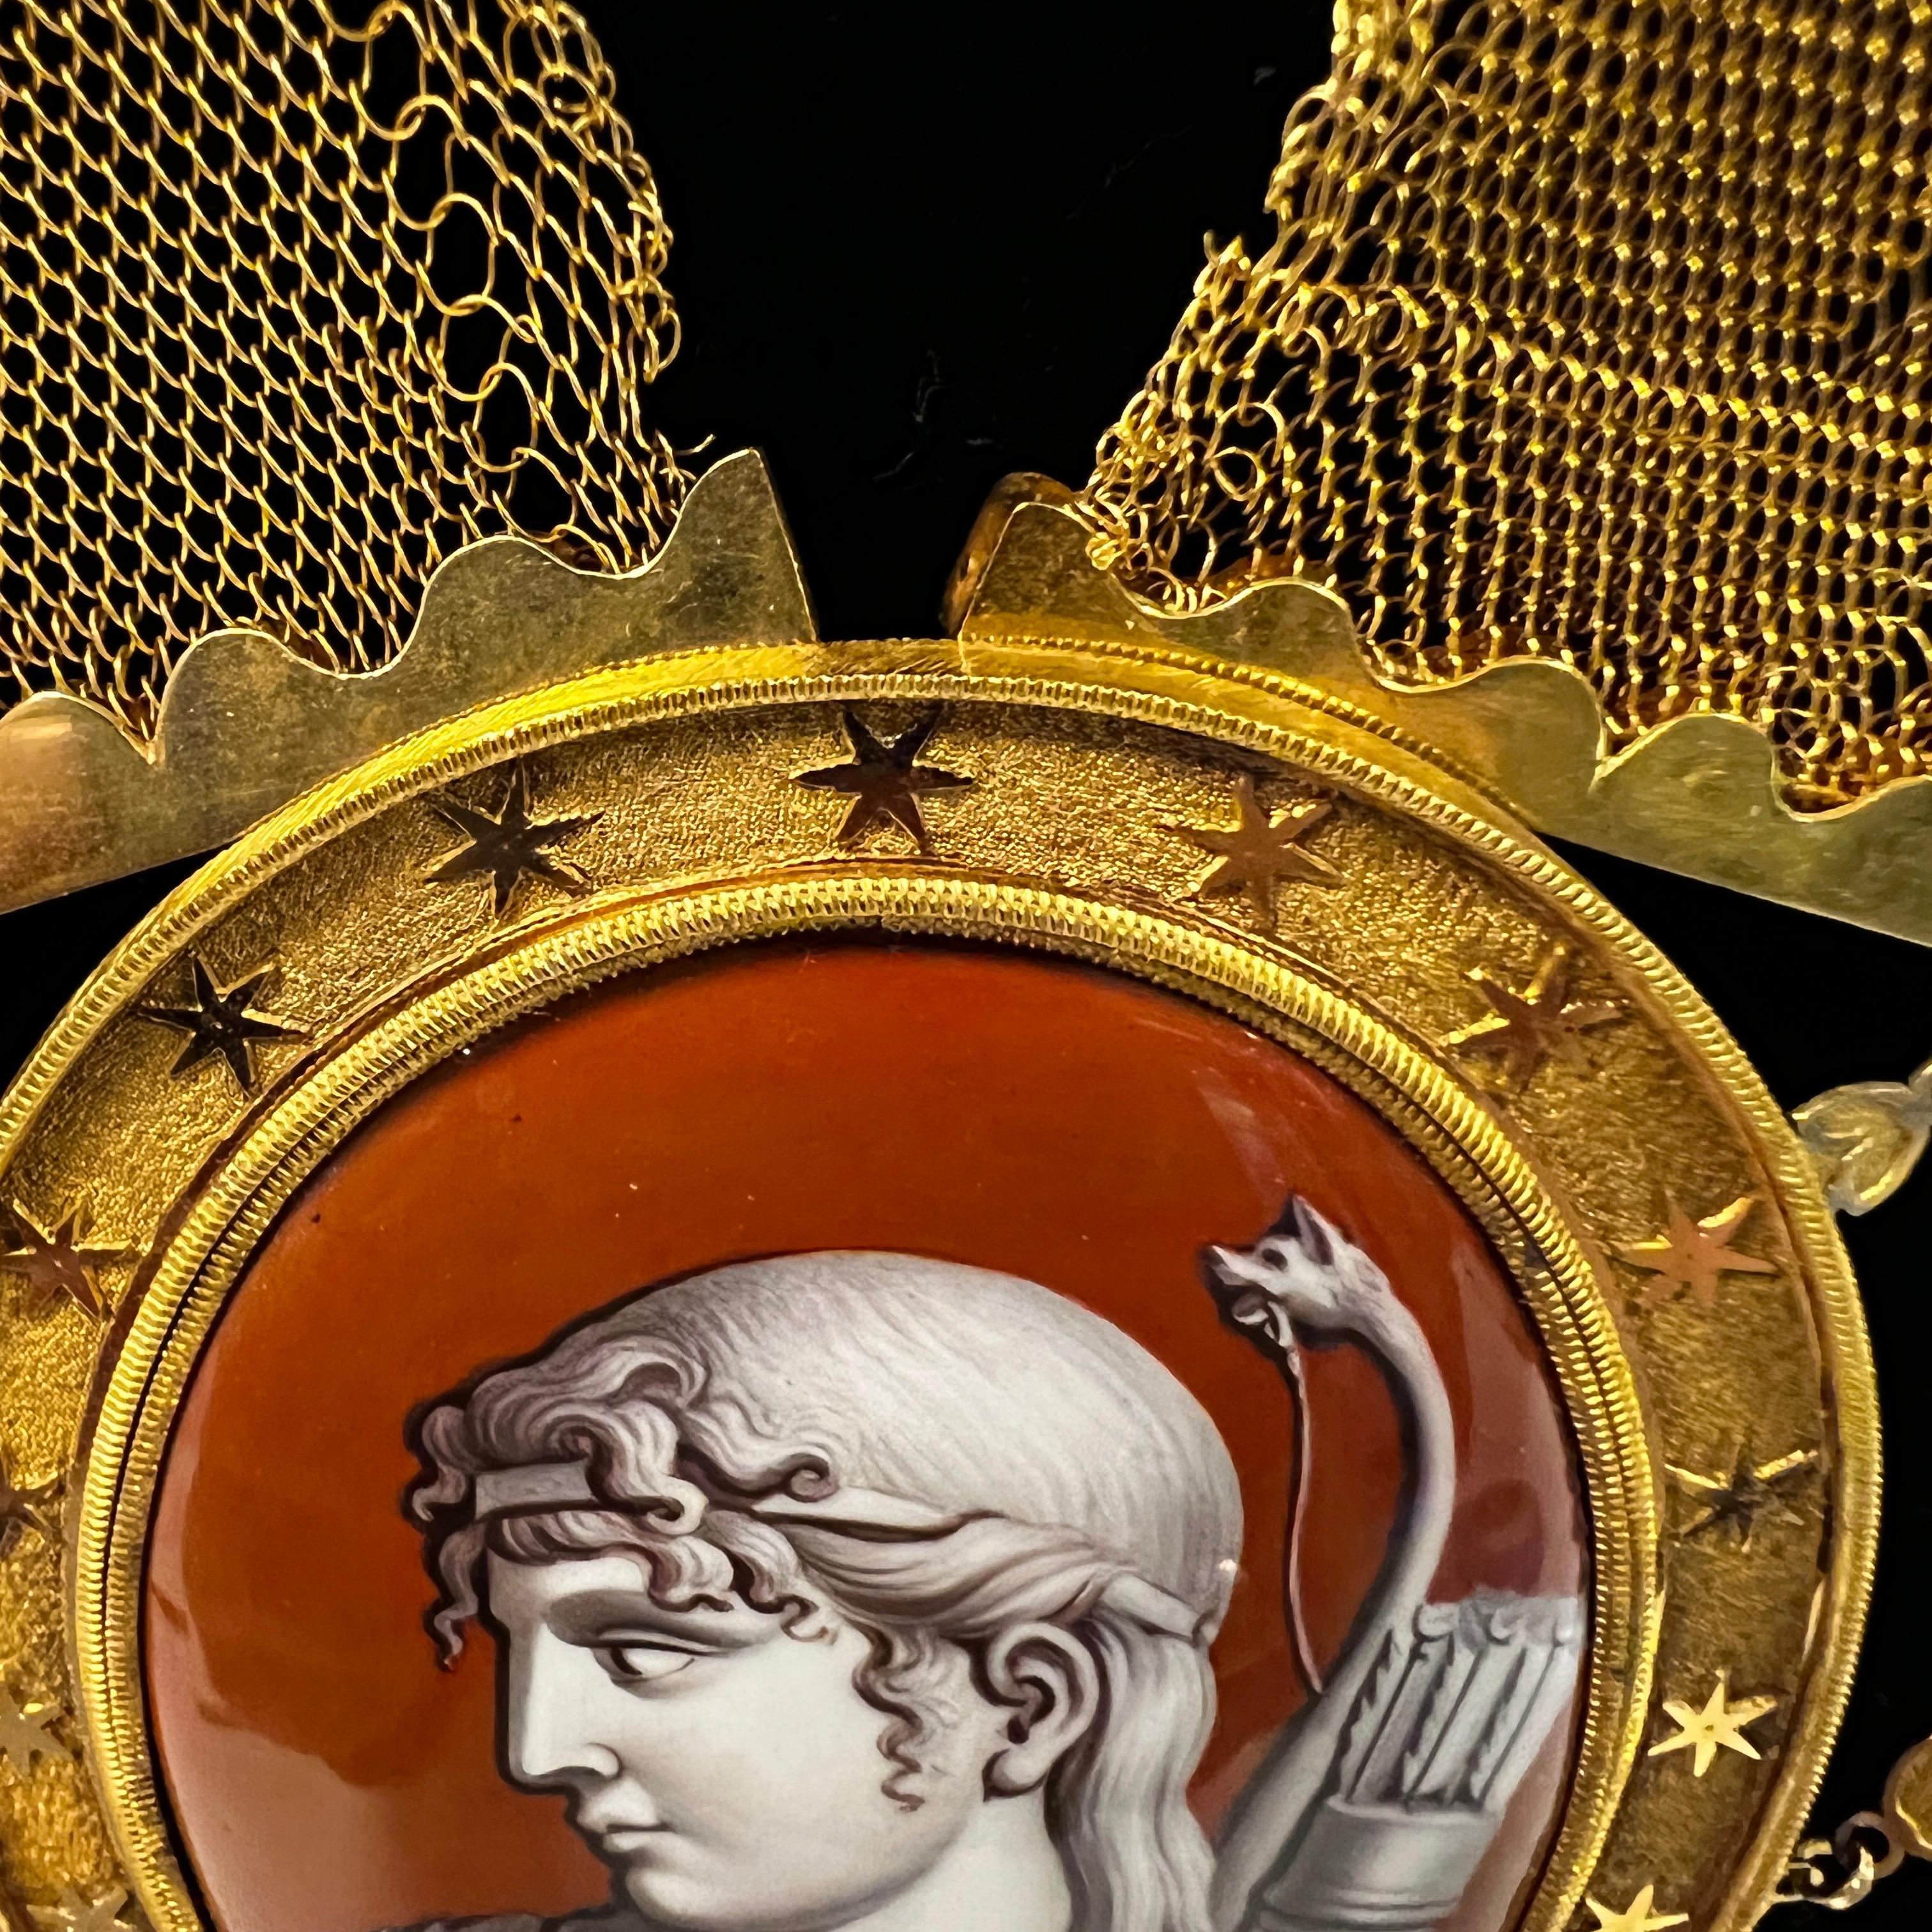 Enamel and Gilt Bronze Cameo Necklace Depicting Goddess Artemis / Diana For Sale 10